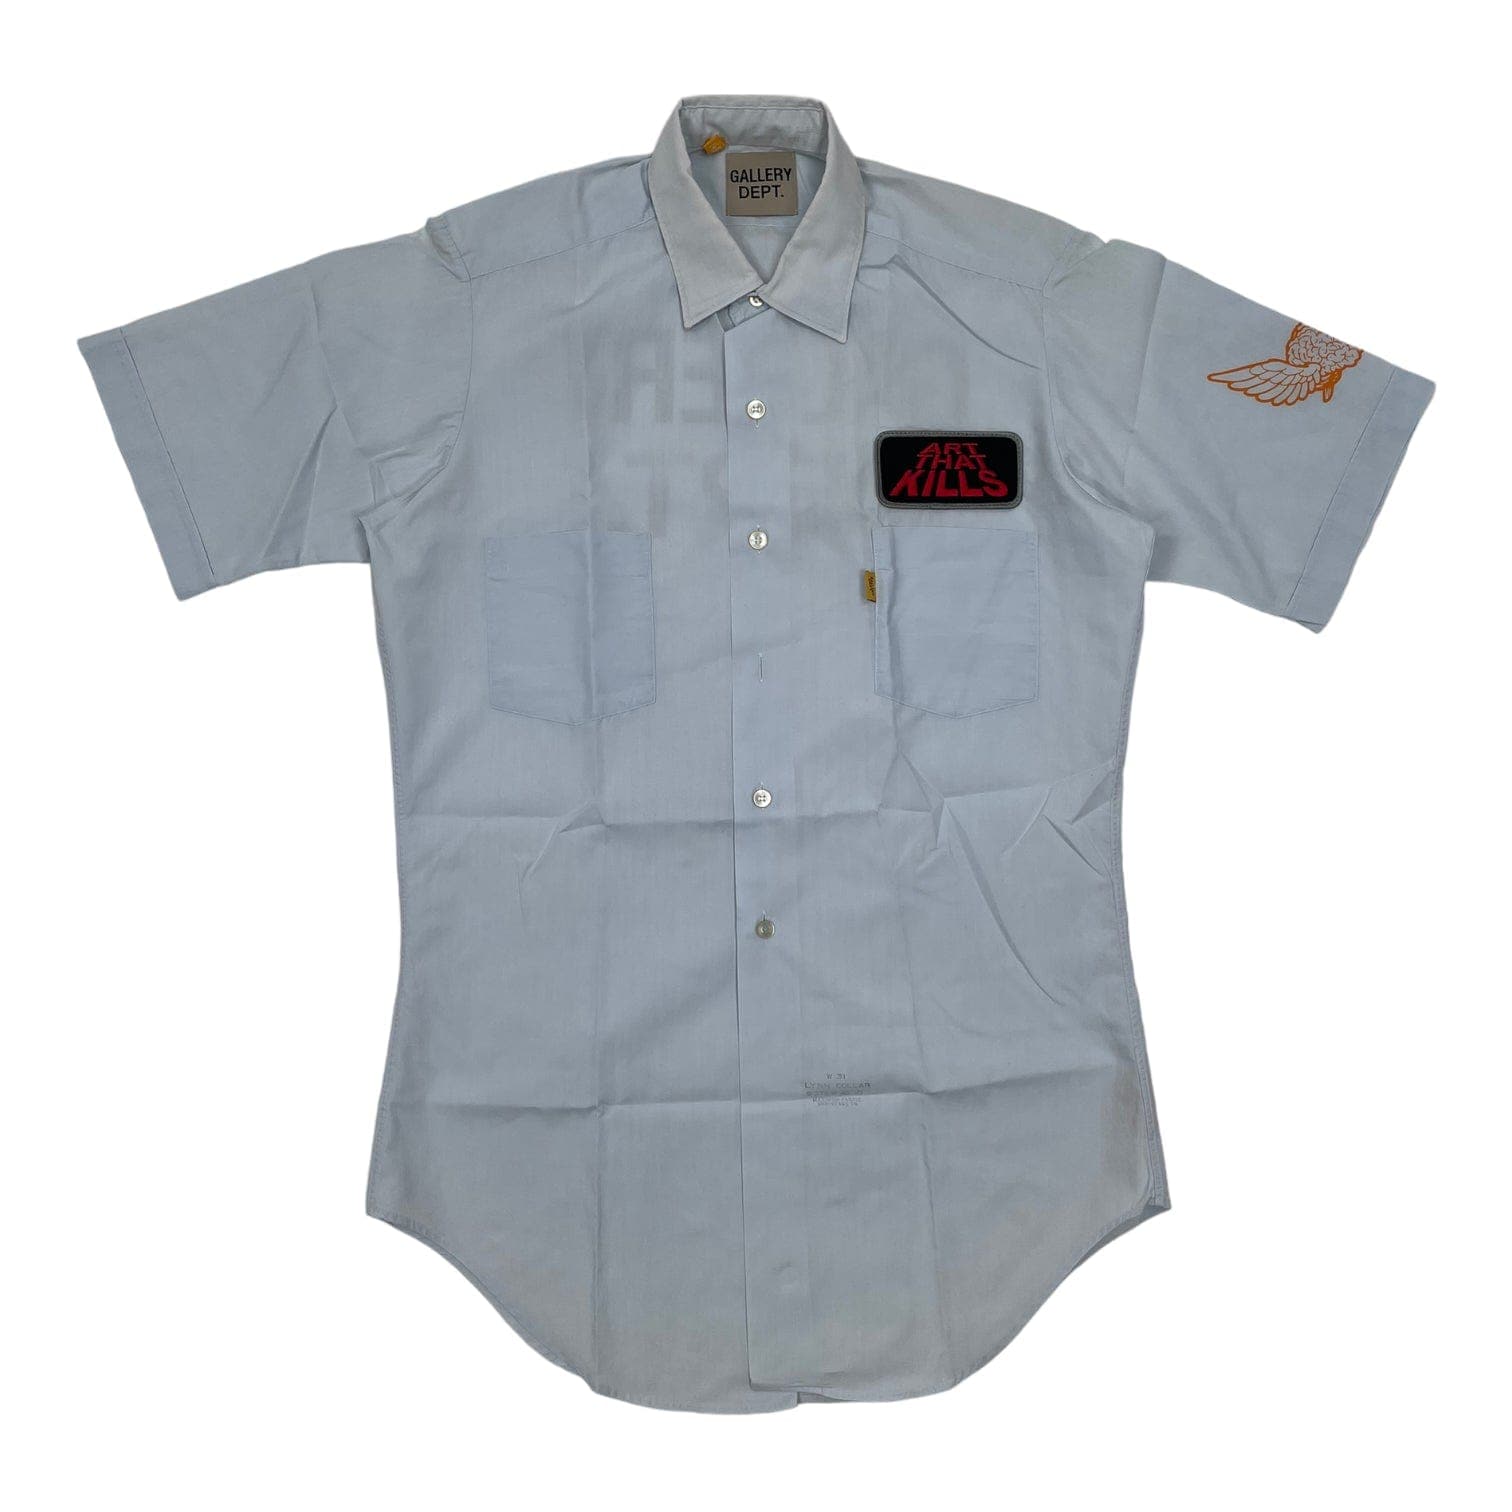 NTWRK Picks: Gallery Dept. - Gallery Department Vintage Mechanic Button Up  Shirt Blue Pre-Own